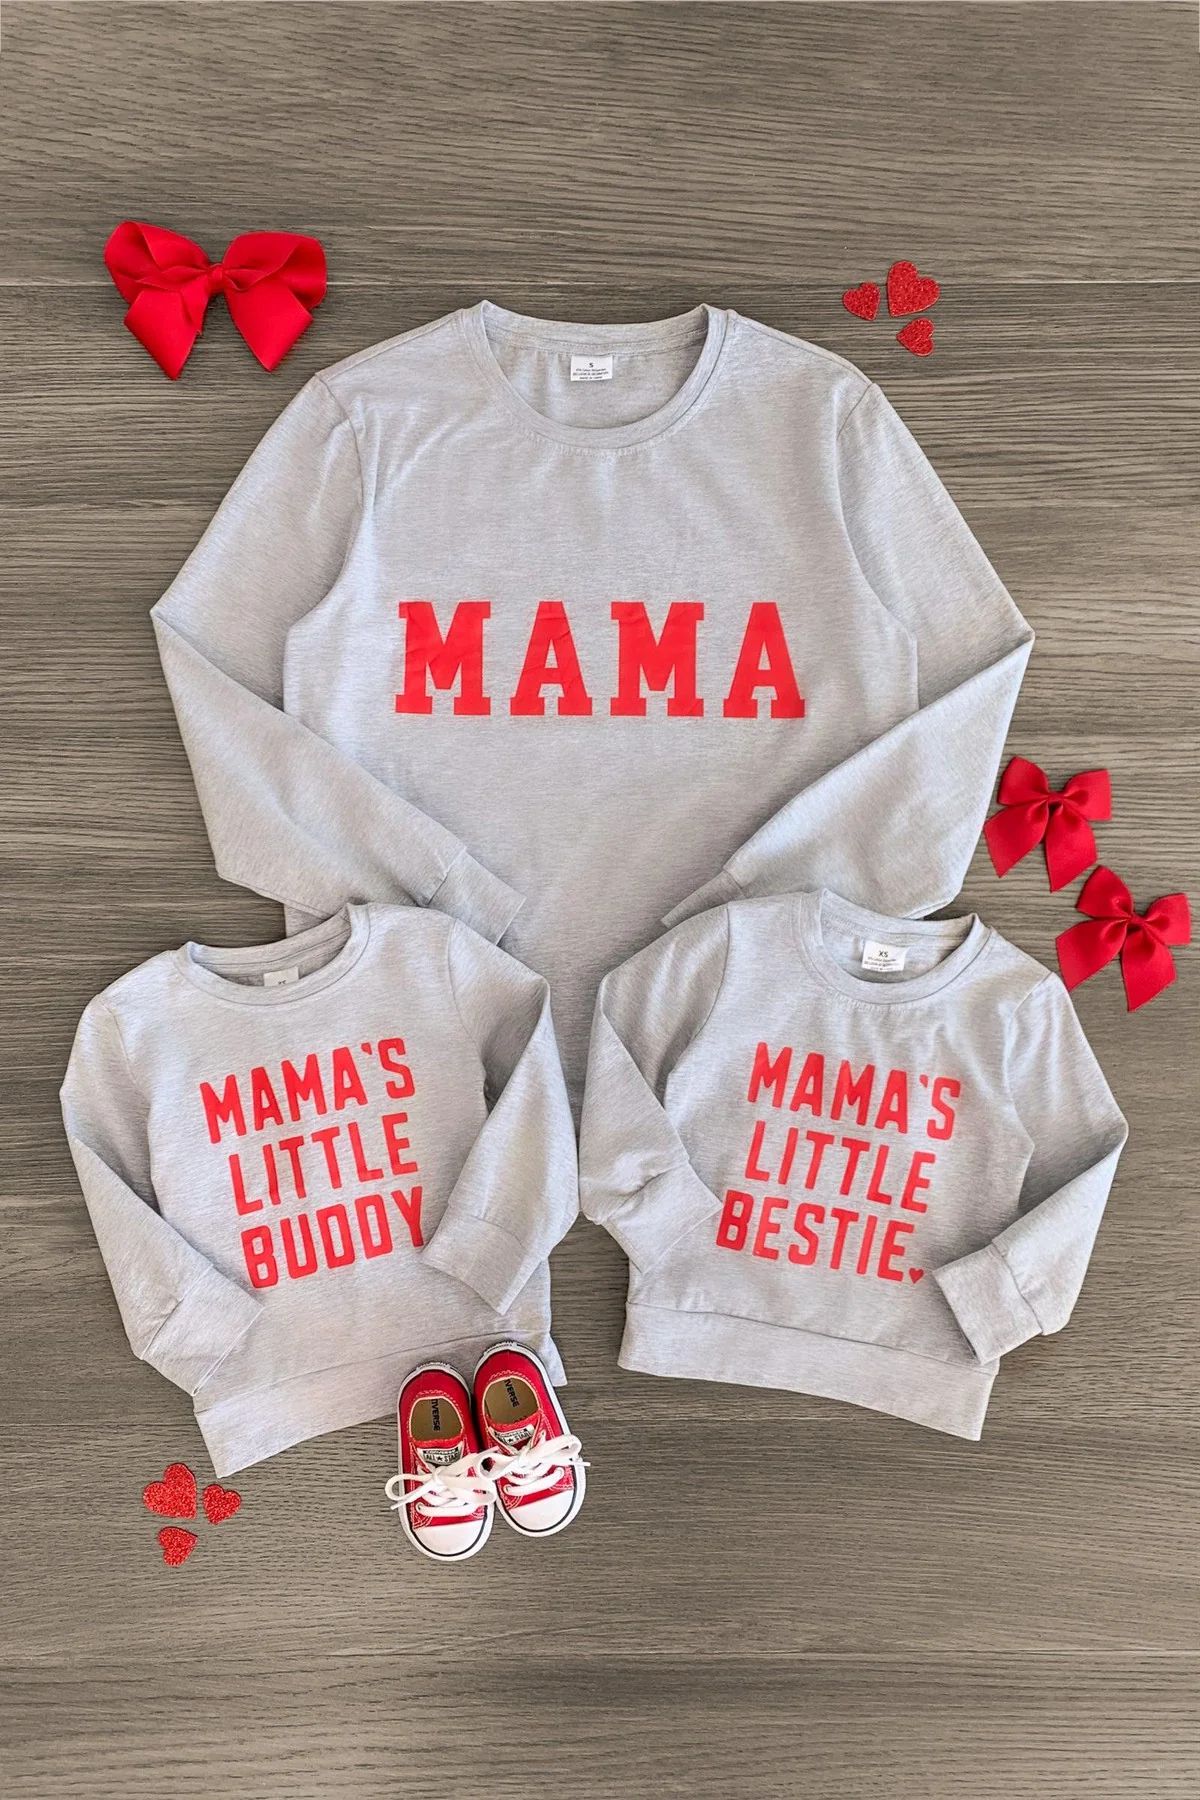 Mom & Kid - "Mama's Little Bestie & Buddy" Gray Top | Sparkle In Pink